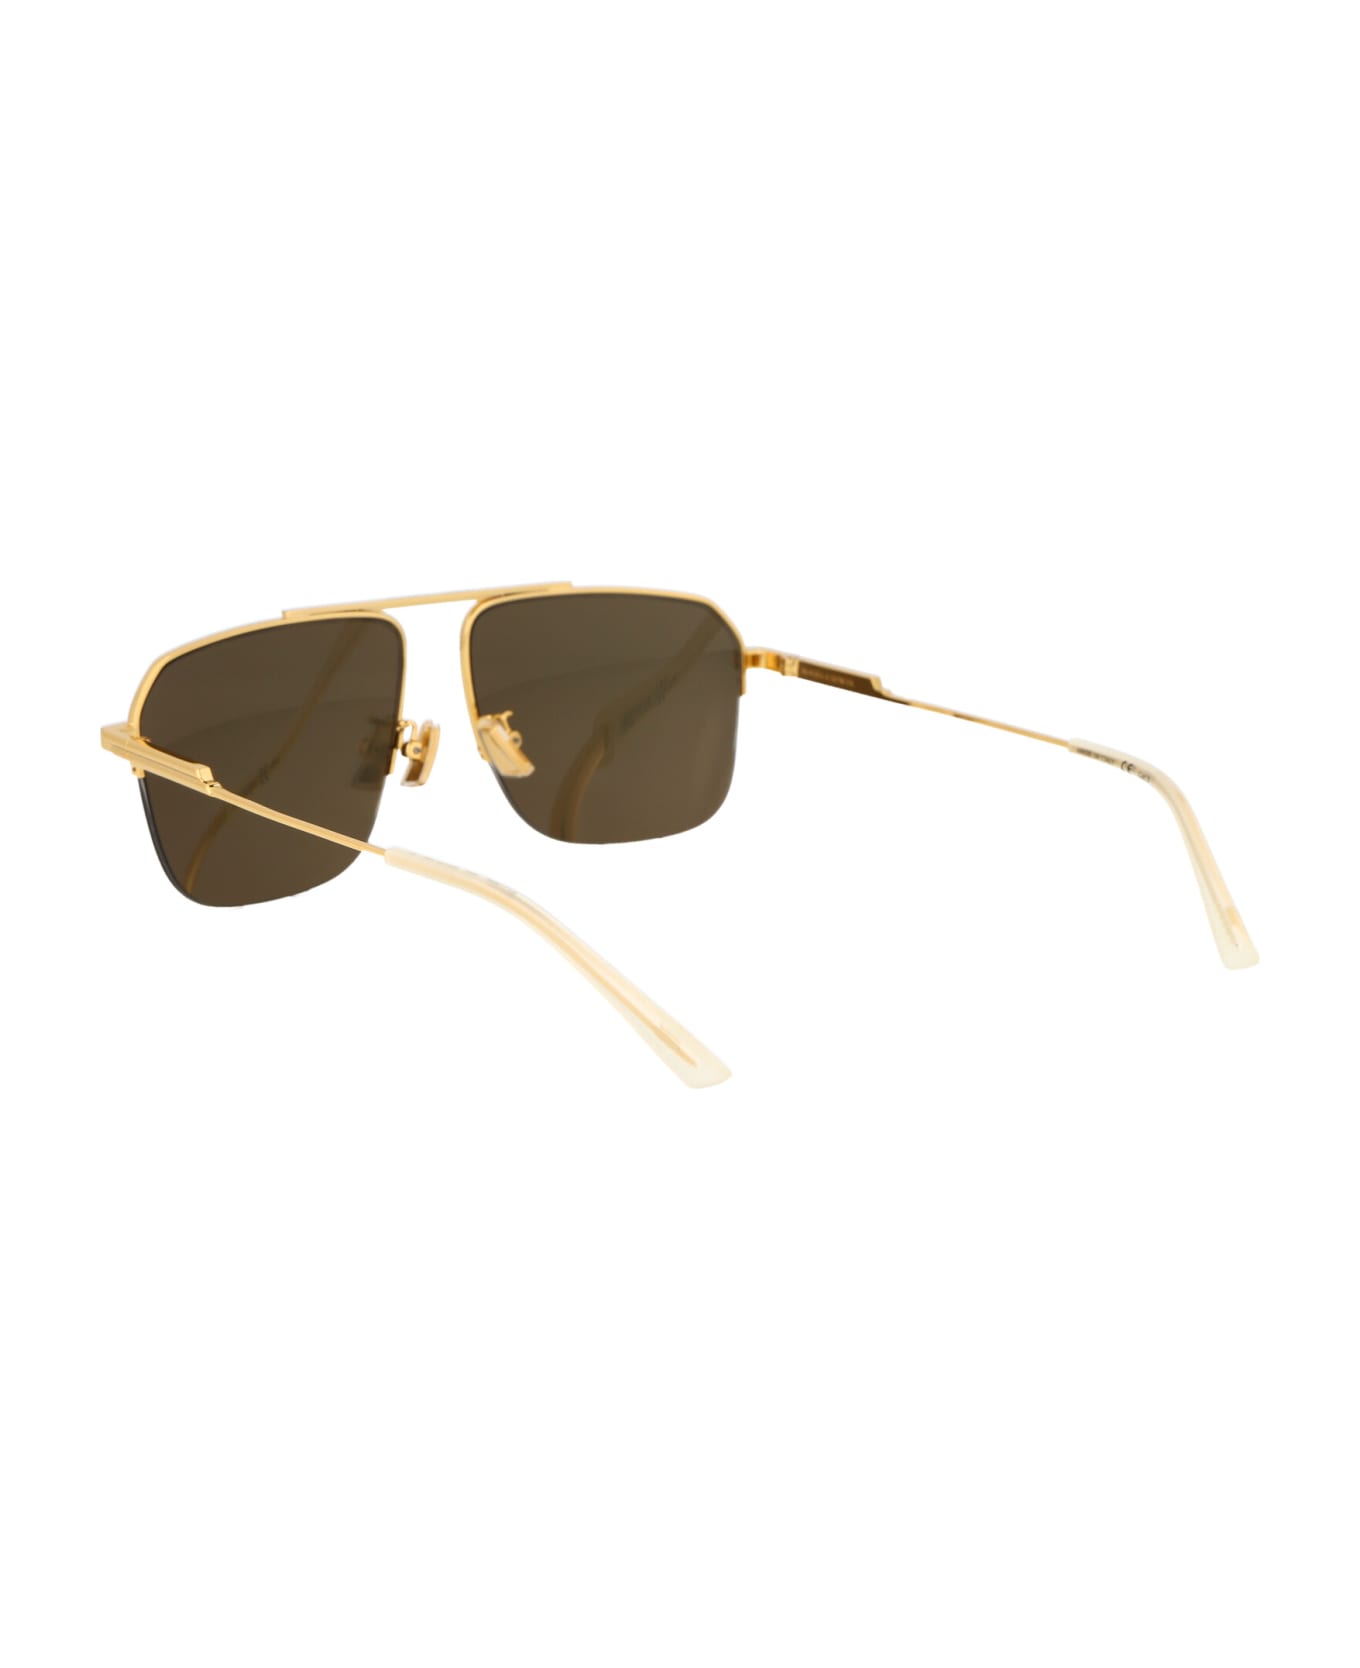 Bottega Veneta Eyewear Bv1149s Sunglasses - 005 GOLD GOLD GOLD サングラス